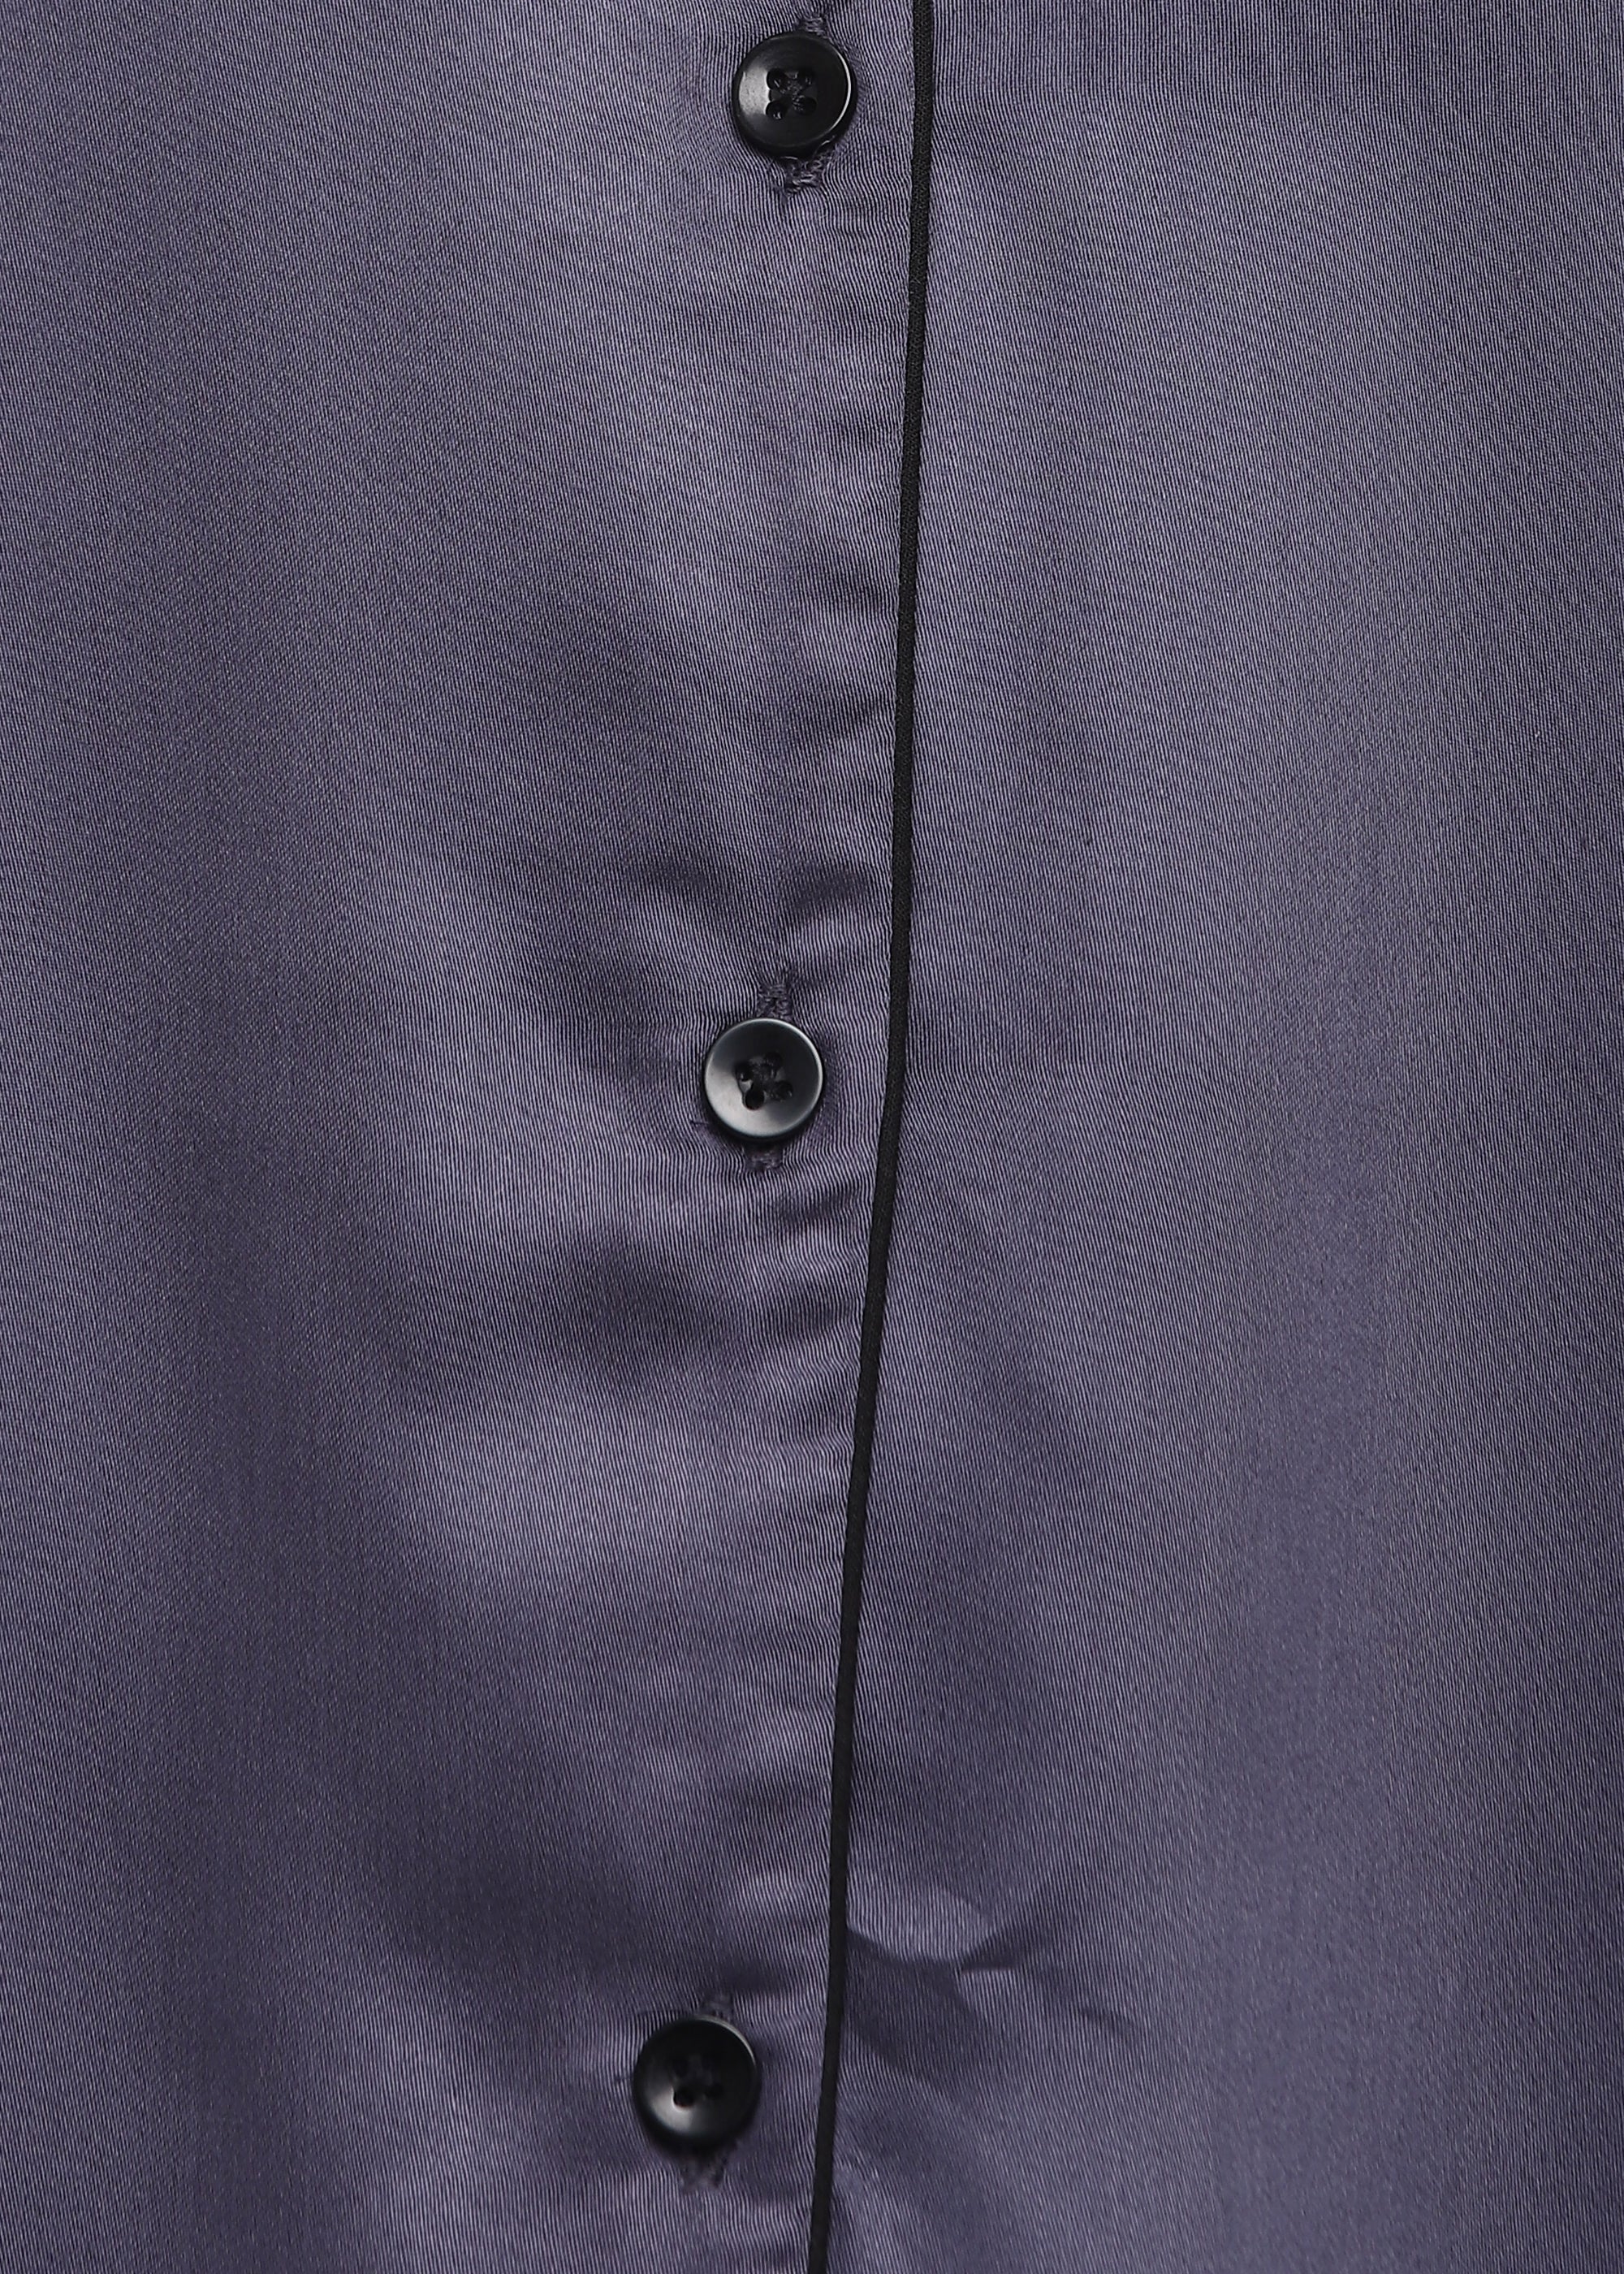 Ultra Soft Dark Grey Modal Satin Long Sleeve Women's Night Suit - Shopbloom